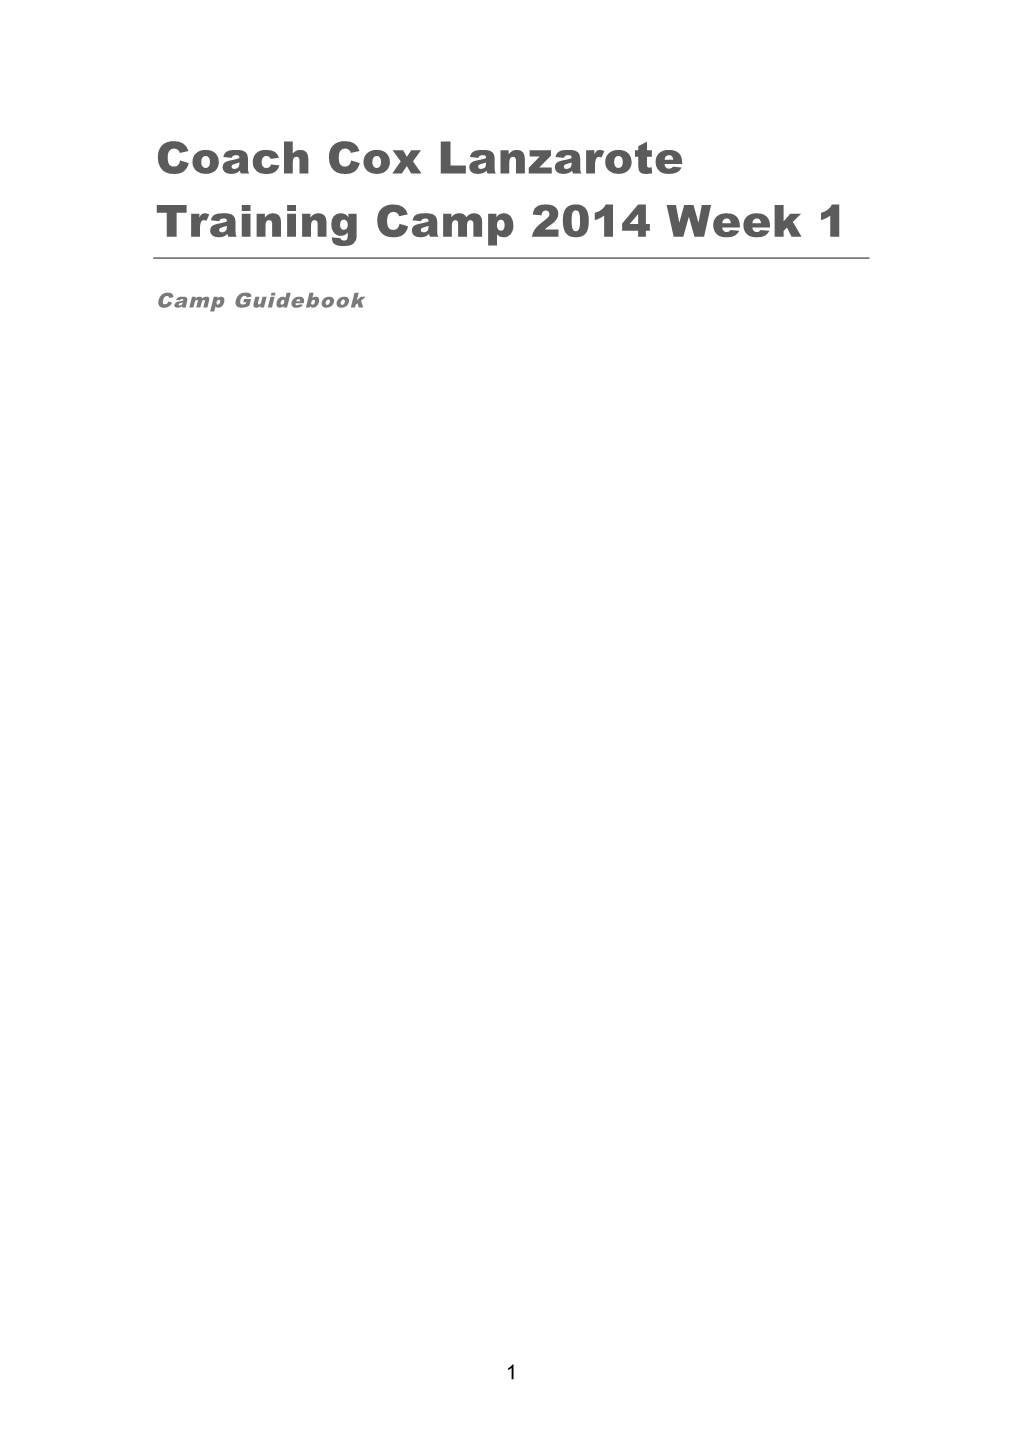 Coach Cox Lanzarote Training Camp 2014 Week 1